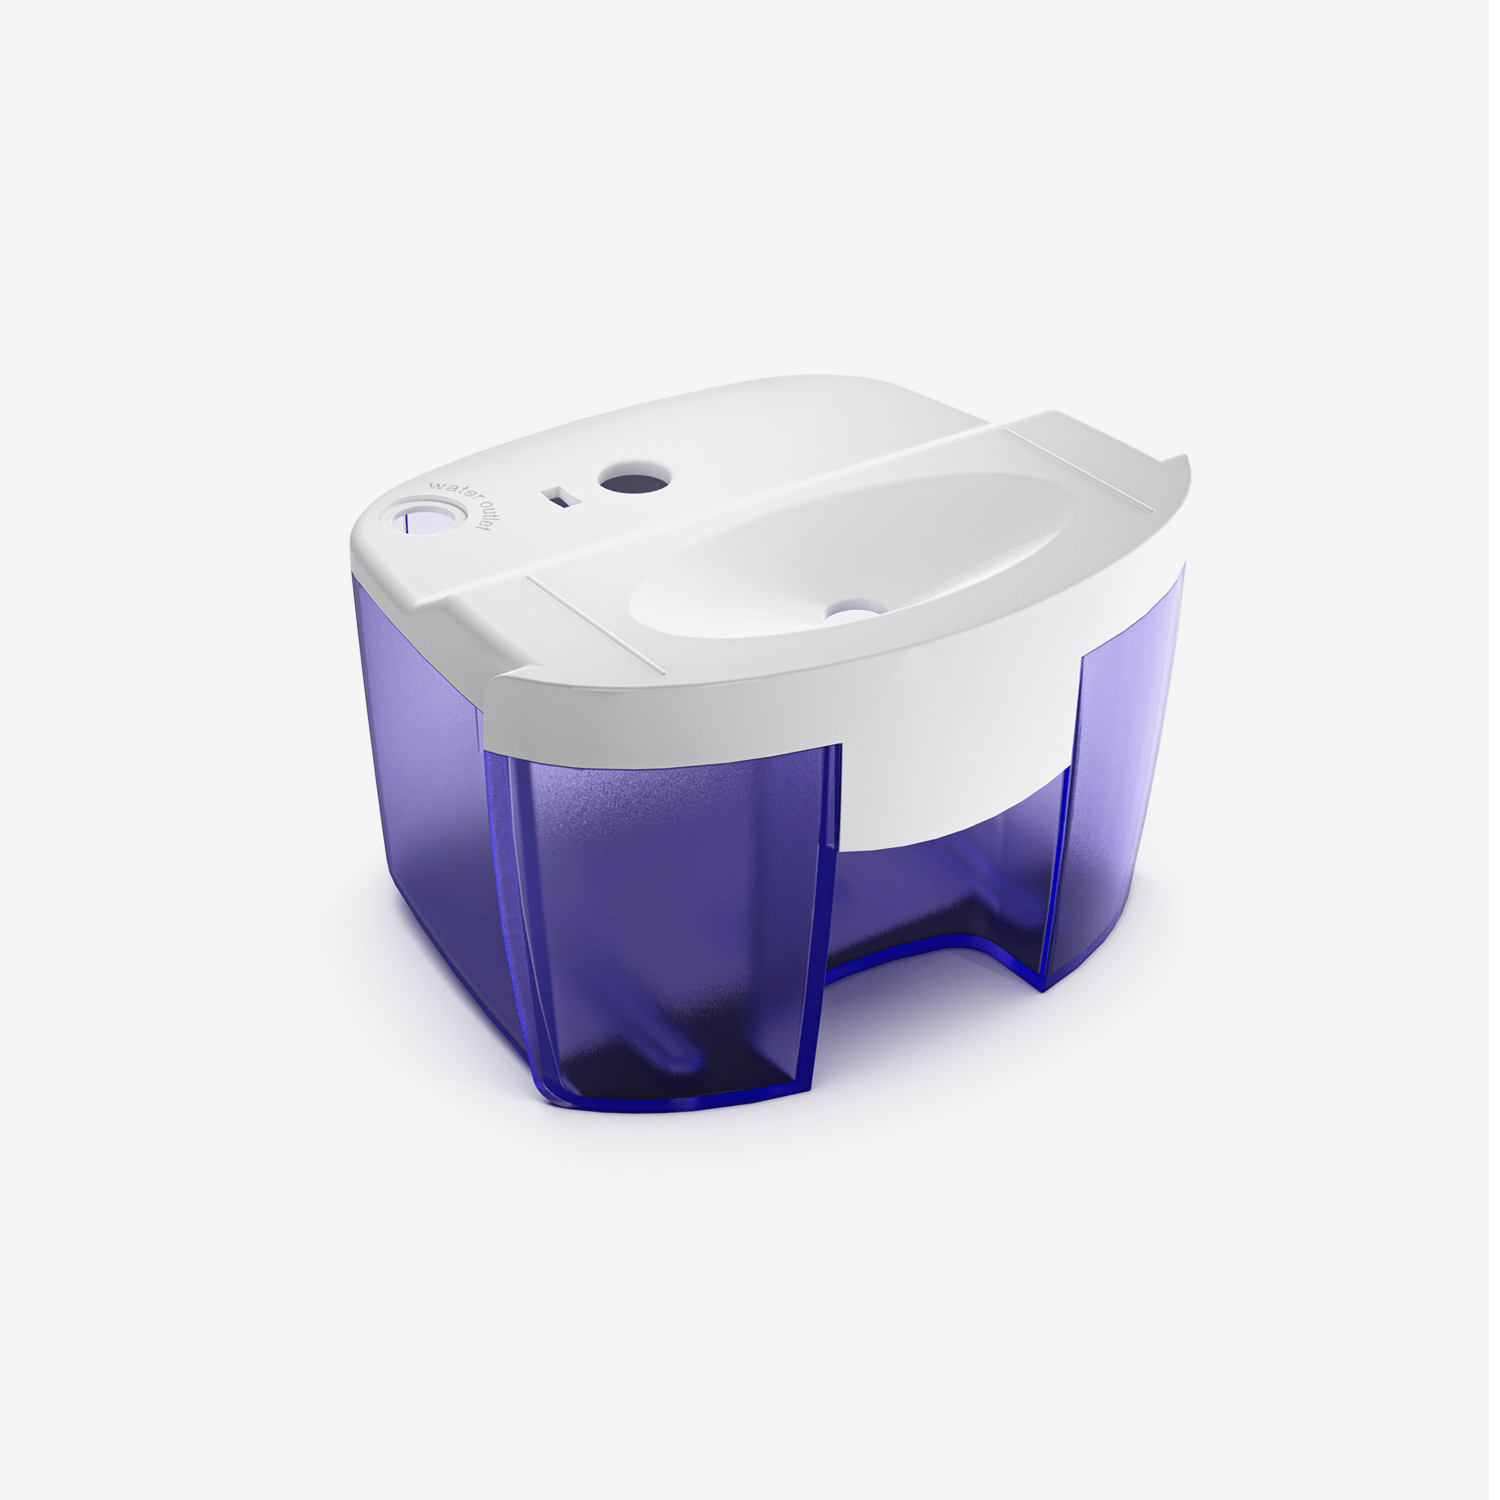 1200 Cubic Feet (205 sq. ft) Electric Mini Dehumidifier - Compact & Portable